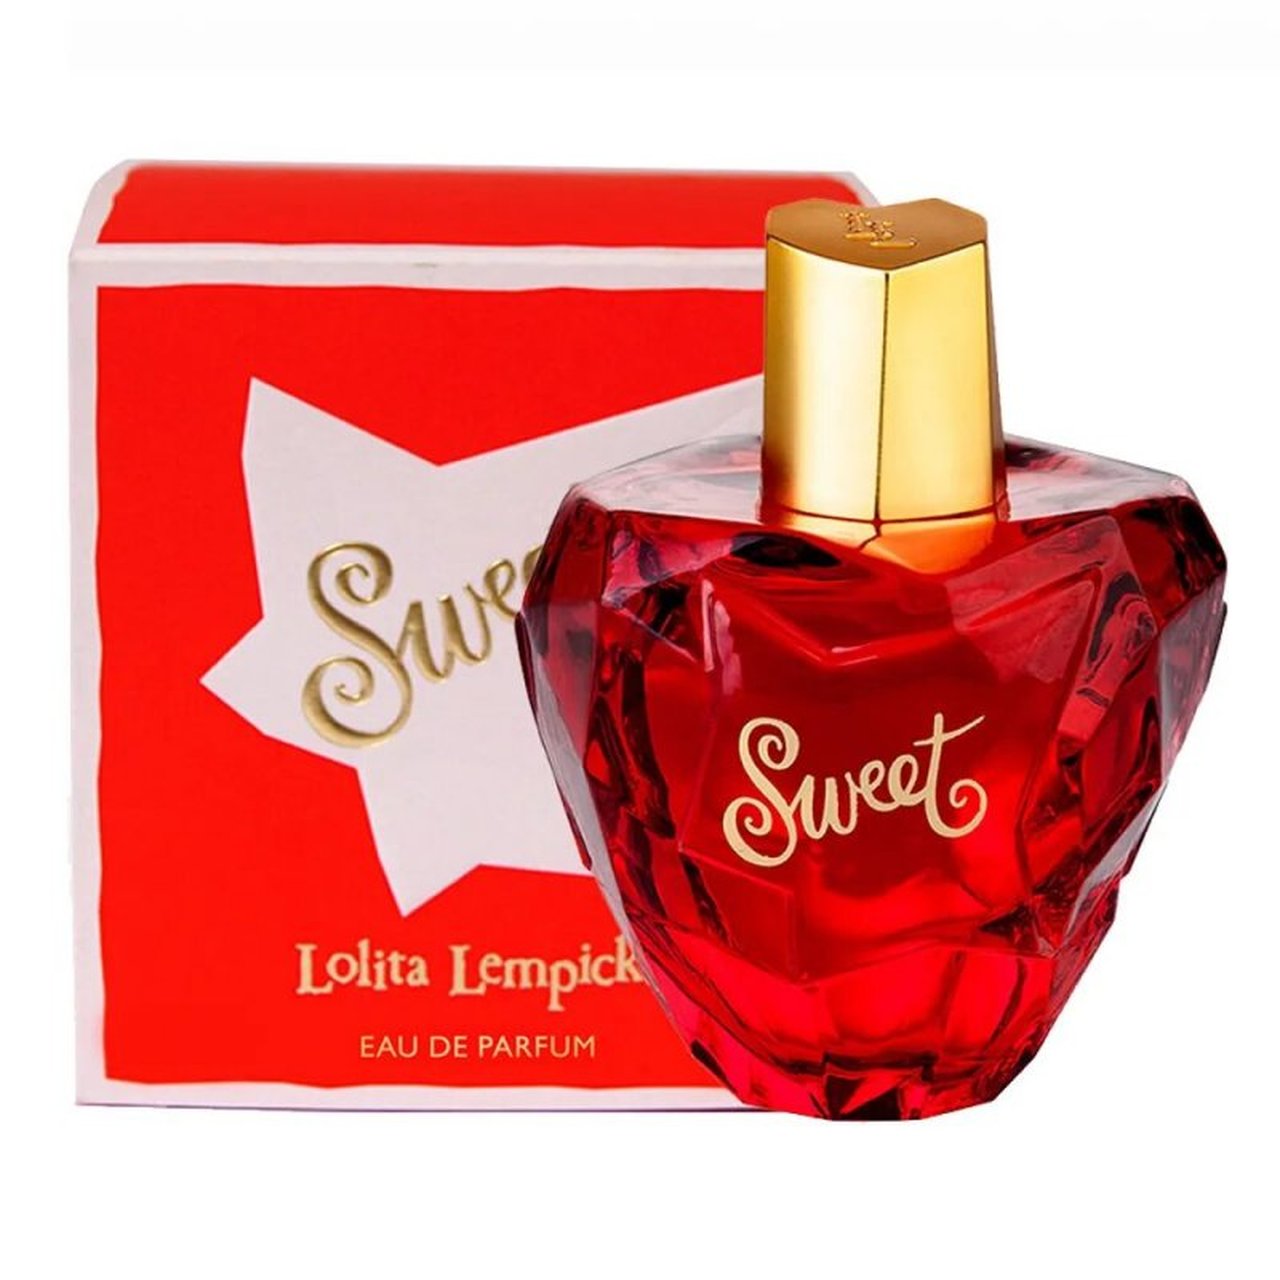 Sweet Lolita Lempicka Eau de Rafaelos ml – 100 3.4 parfum oz